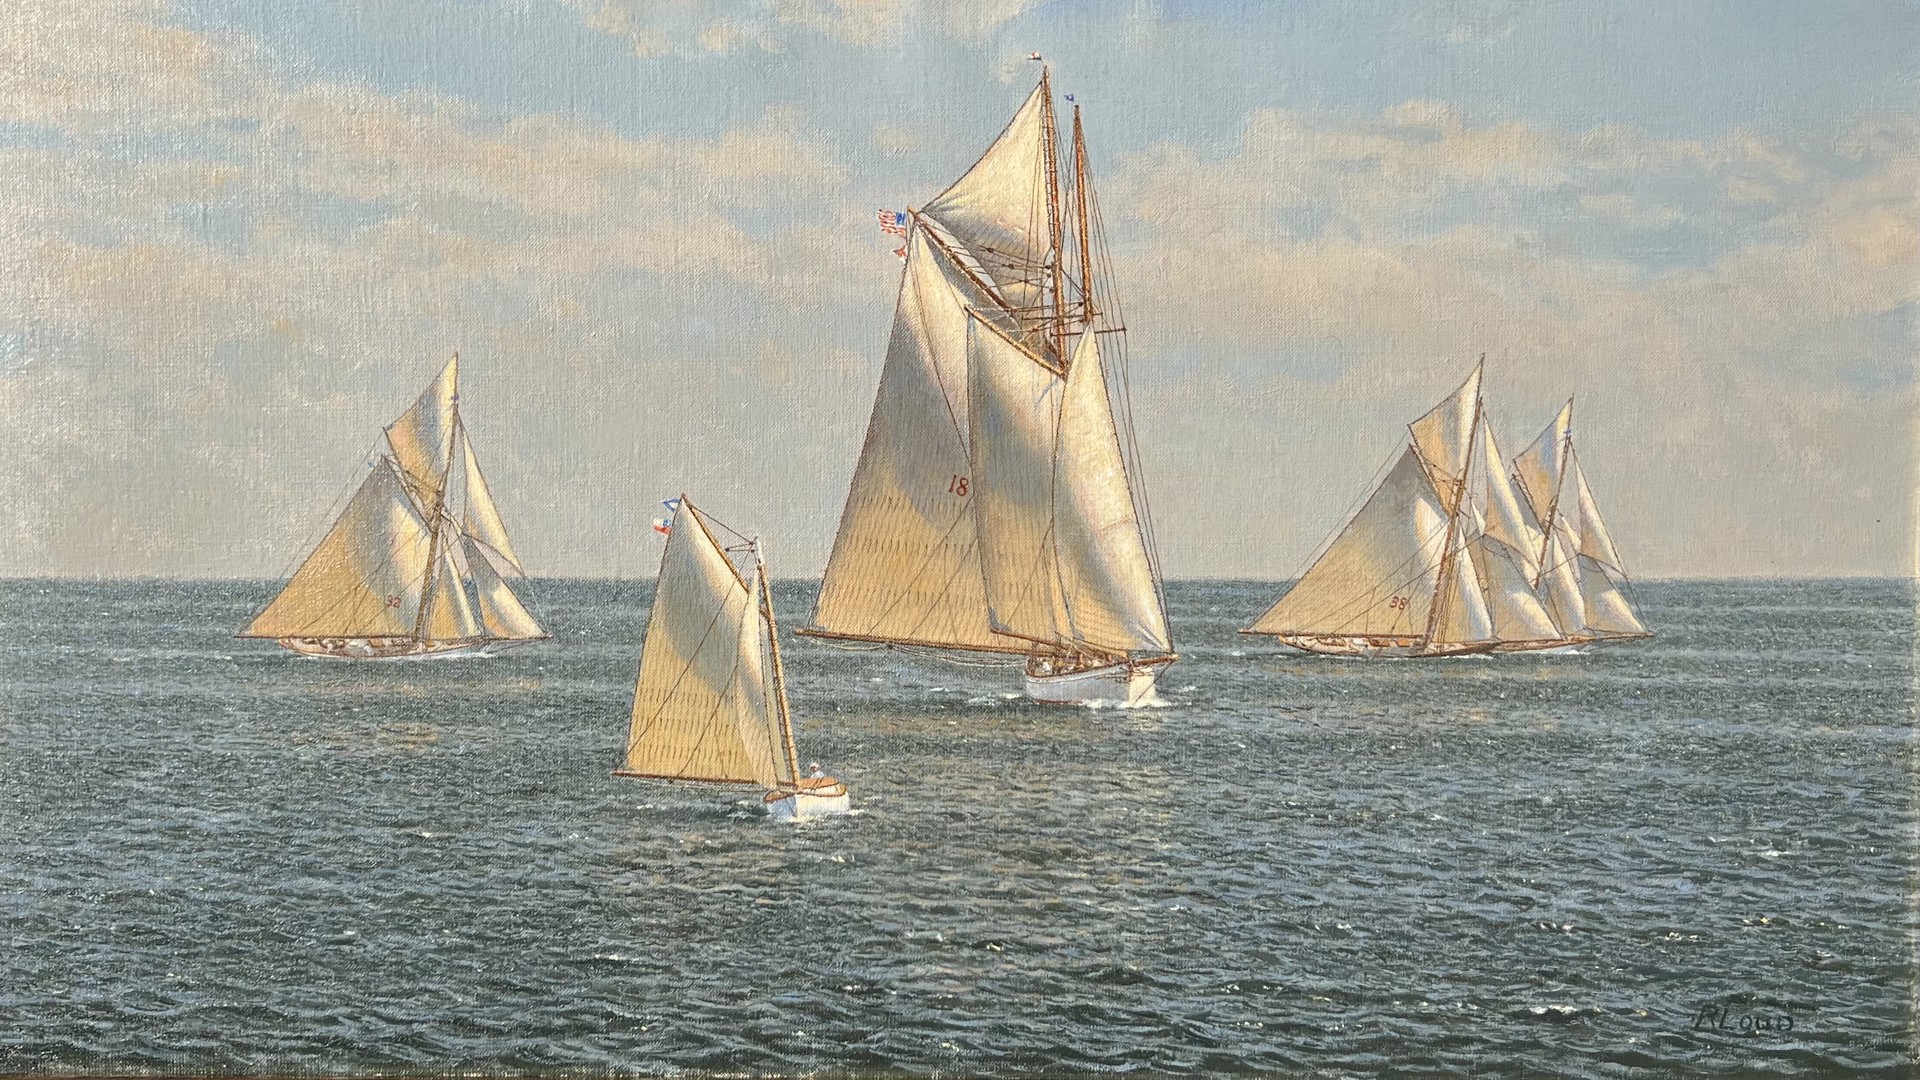 Schooner Yacht Merlin, Marblehead 1891 Study by Richard K. Loud